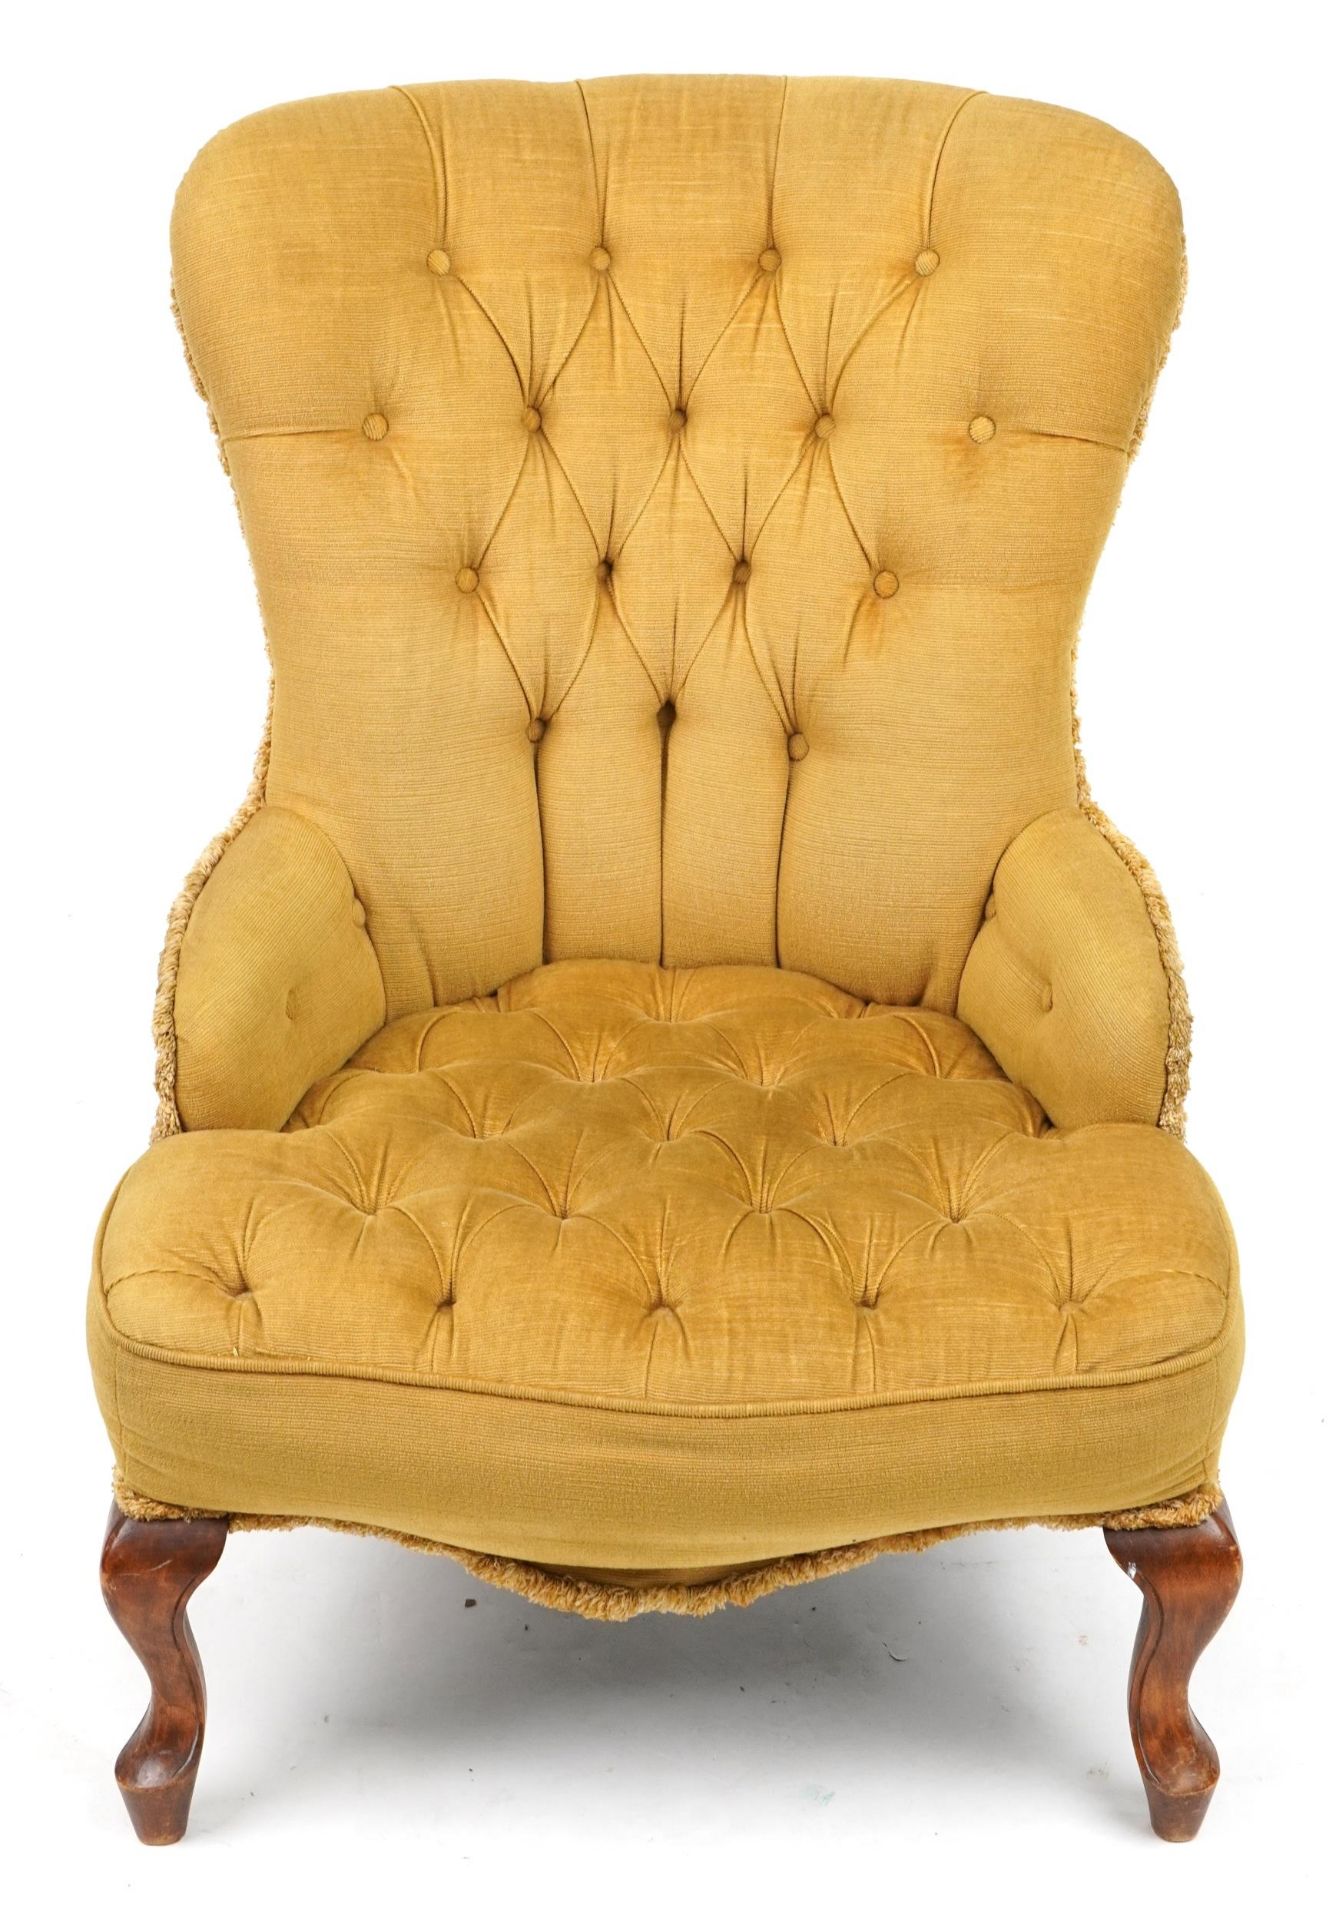 Mahogany framed button back bedroom chair, 86cm high - Bild 2 aus 4